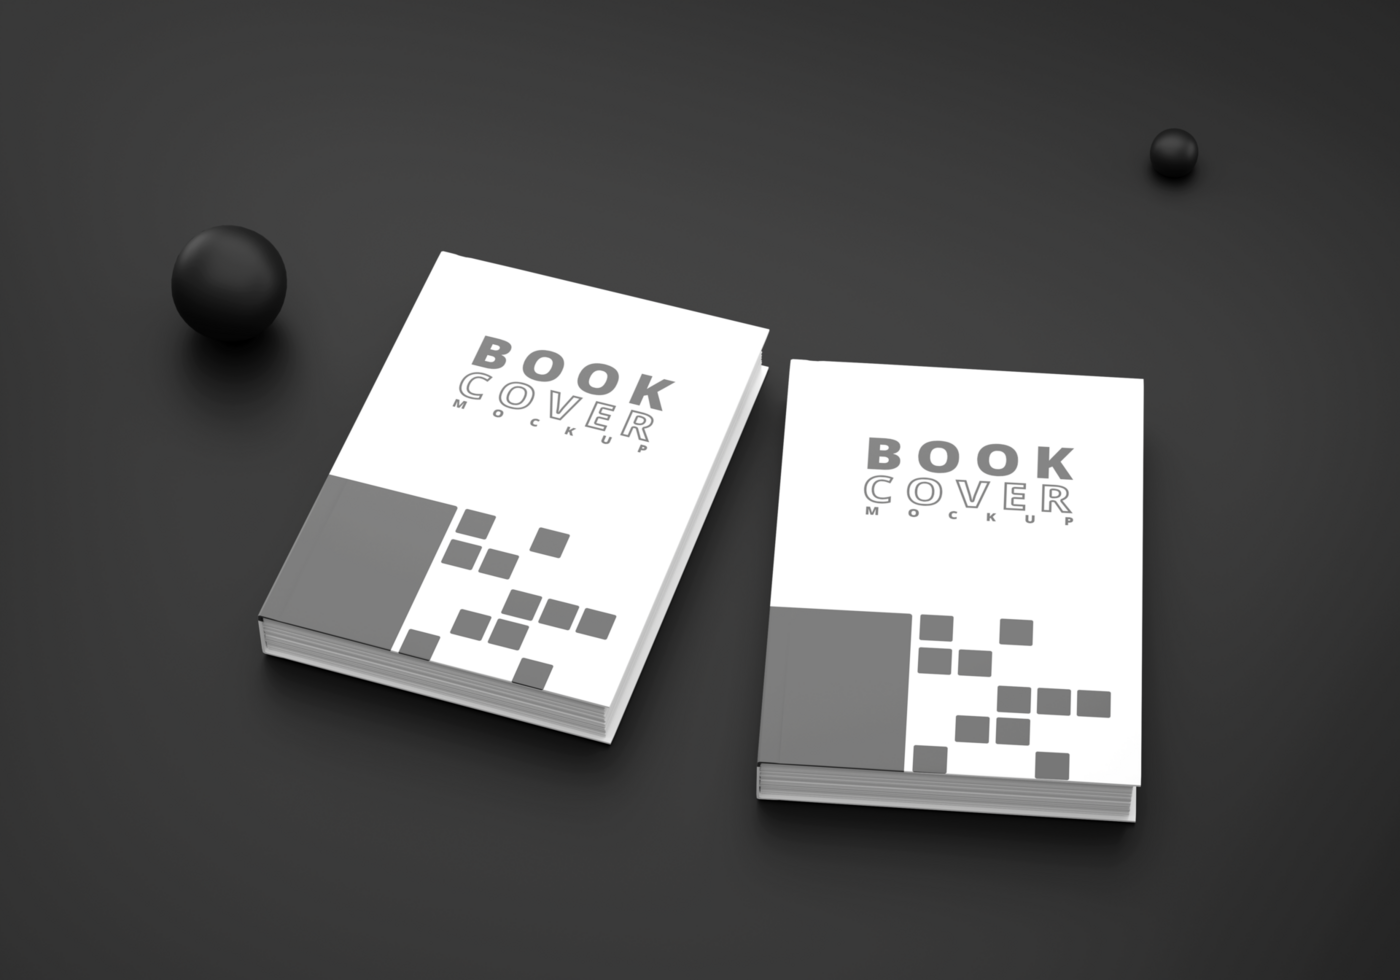 Branding cover book mockup background color black psd